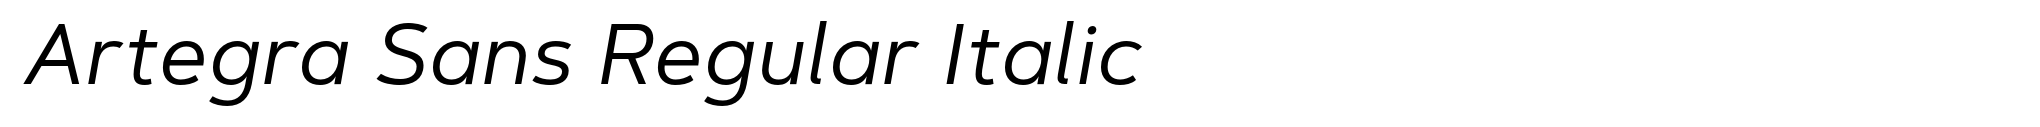 Artegra Sans Regular Italic image